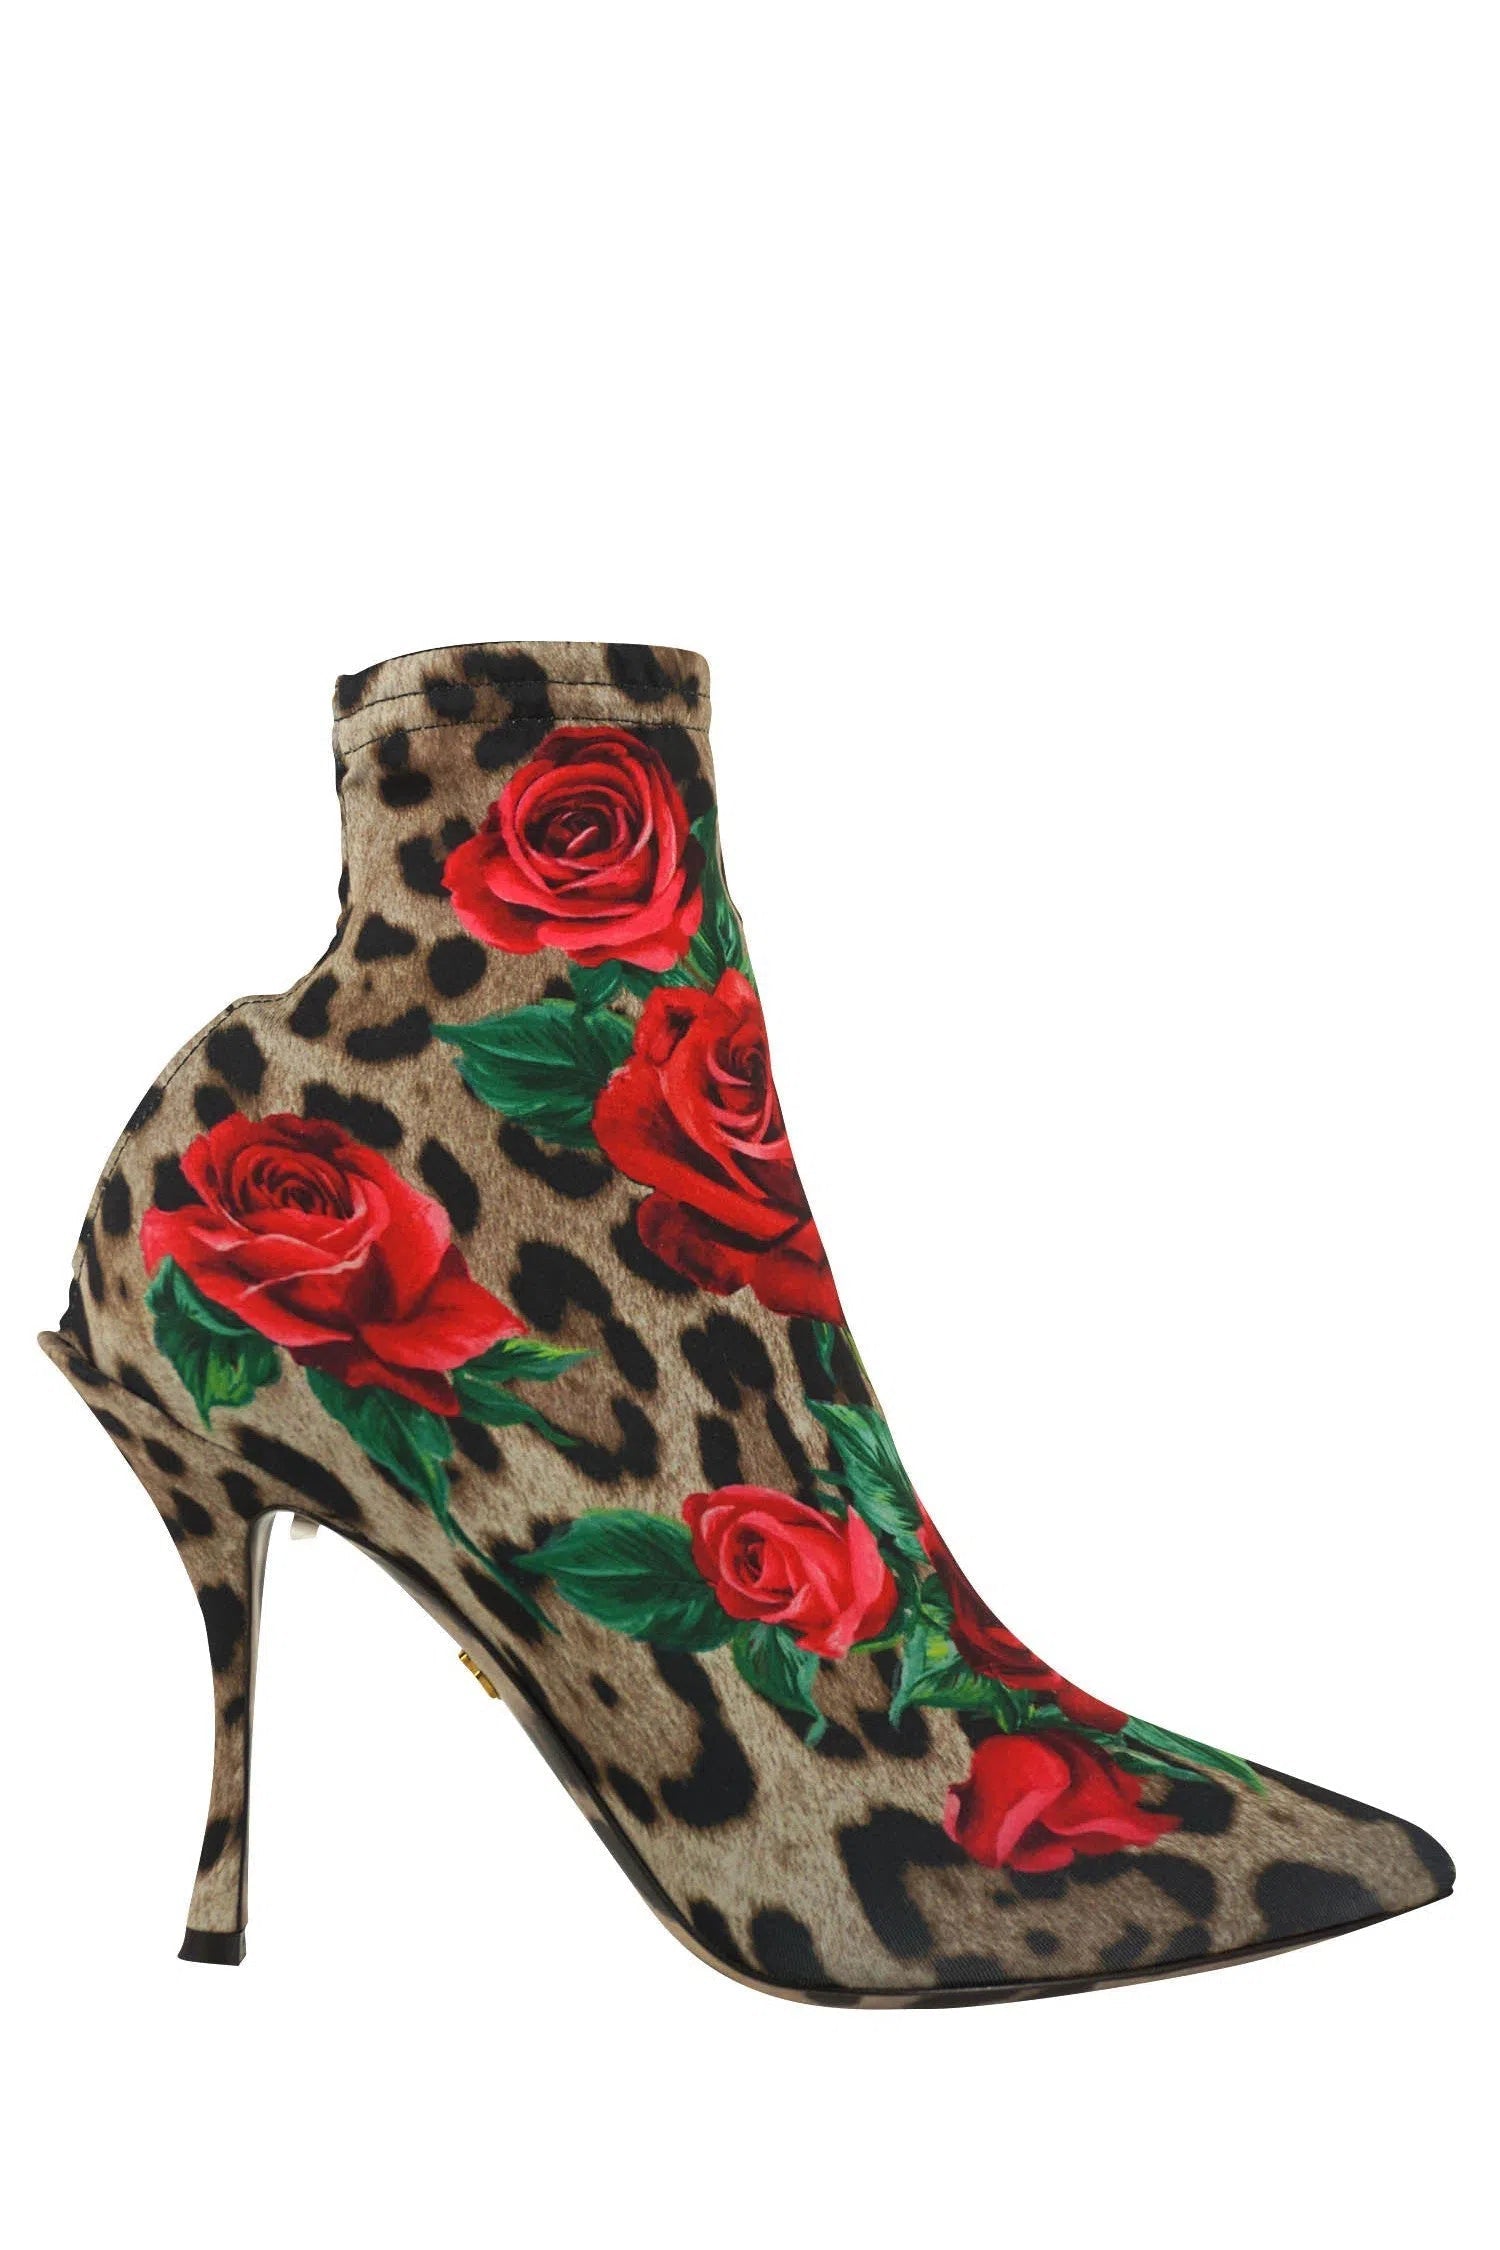 Dolce & Gabbana Roses on Animal Print Sock Boots